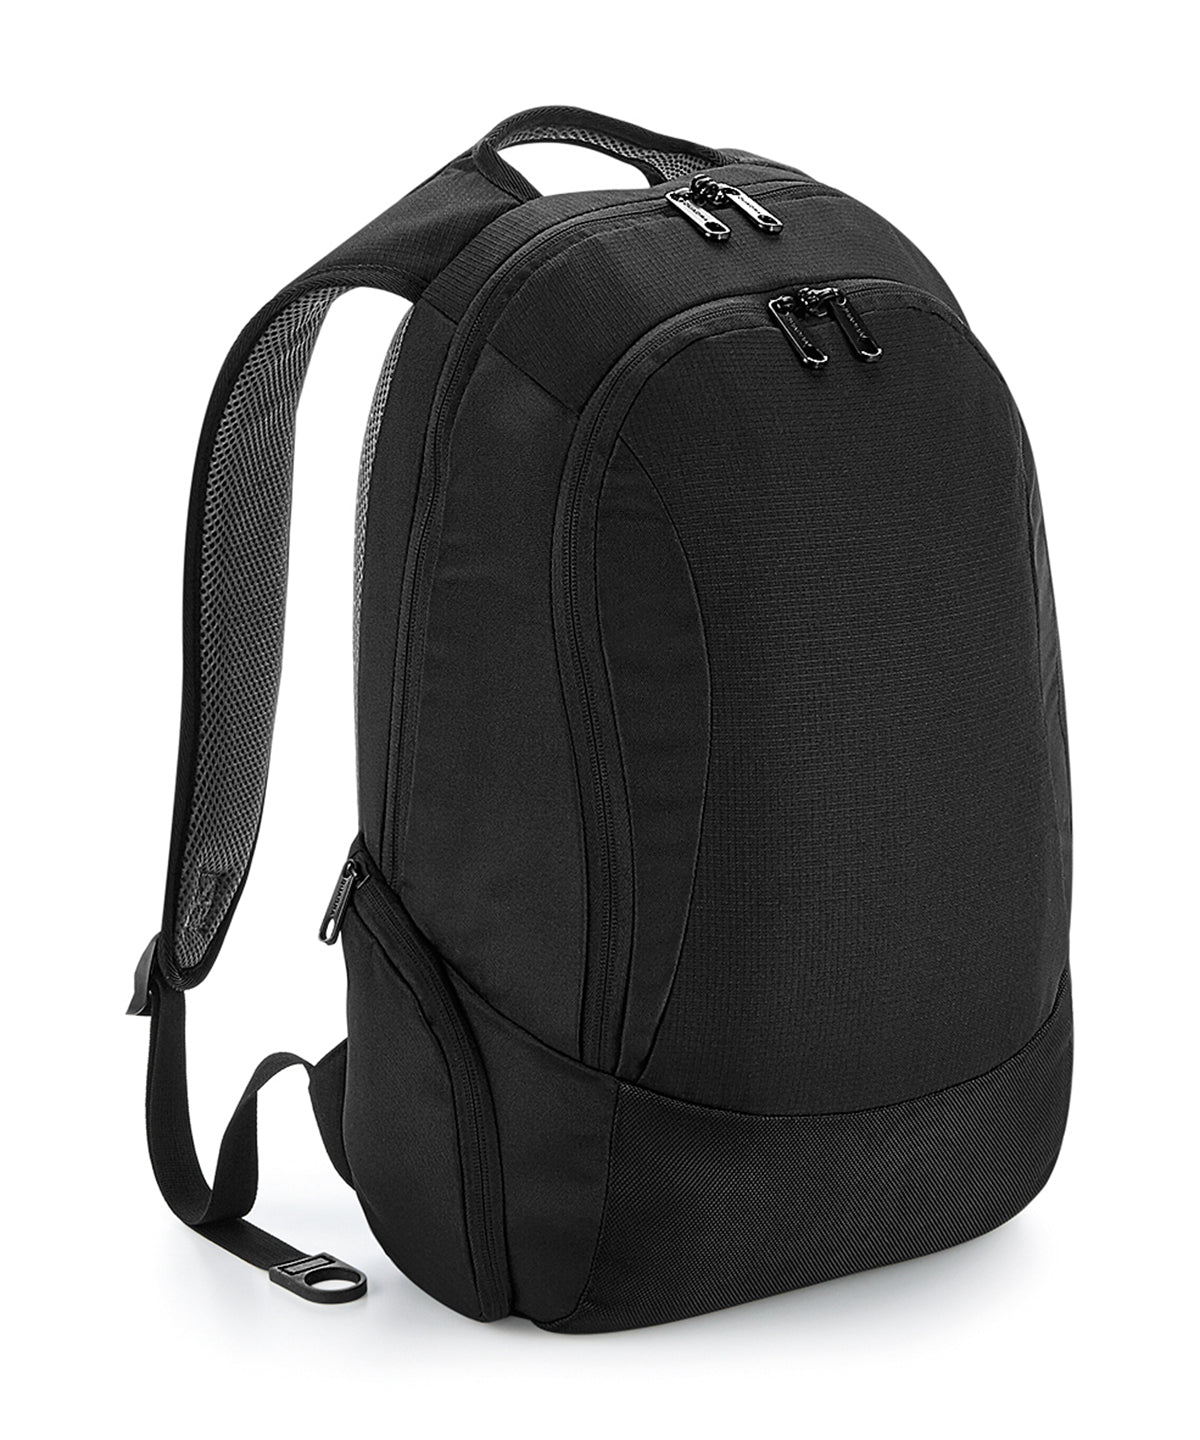 Töskur - Vessel™ Slimline Laptop Backpack